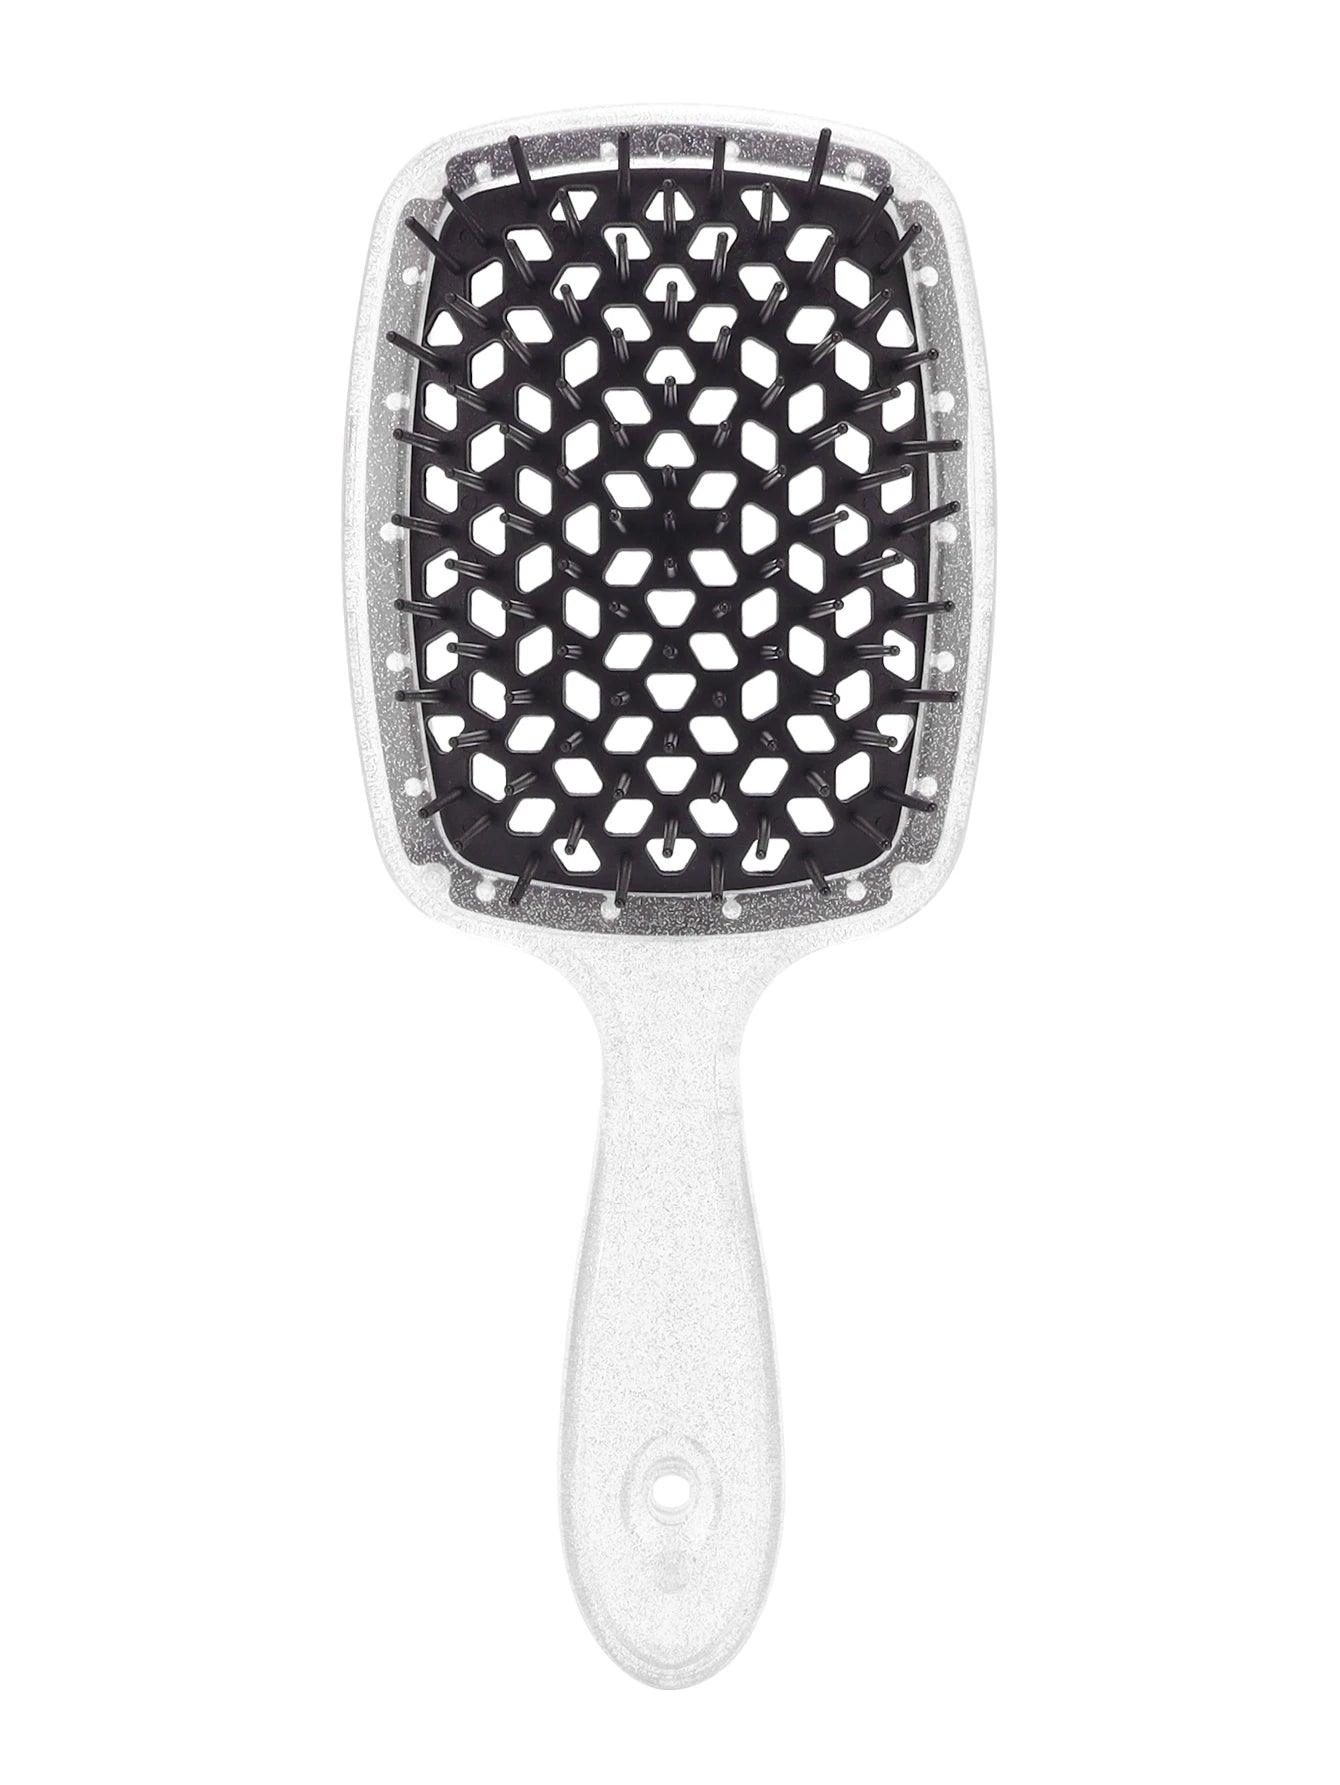 Air Cushion Comb: Anti-static Hair Brush for Wet Curly Hair